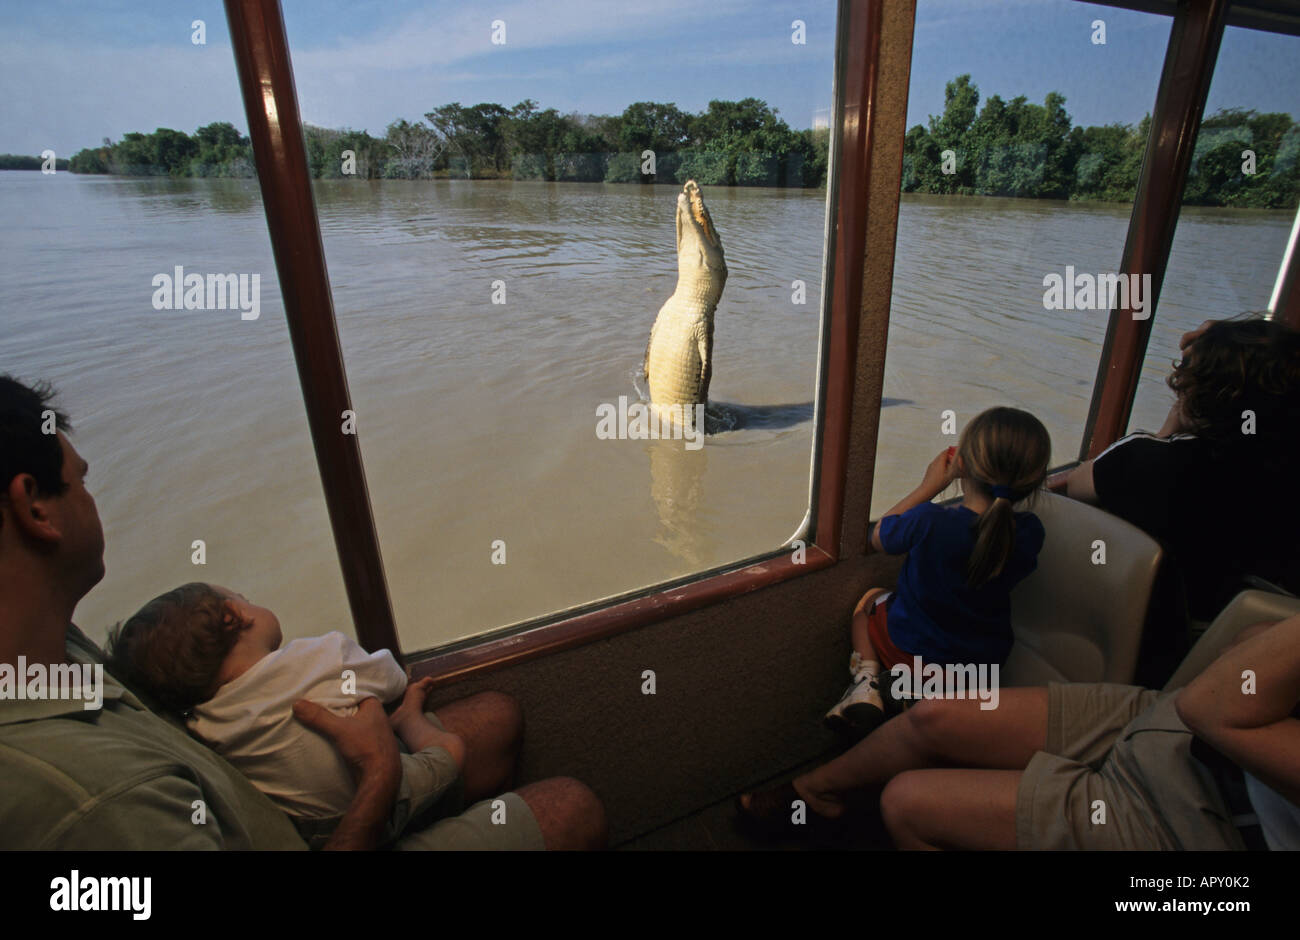 https://c8.alamy.com/comp/APY0K2/jumping-crocodiles-adelaide-river-australien-northern-territory-tourist-APY0K2.jpg